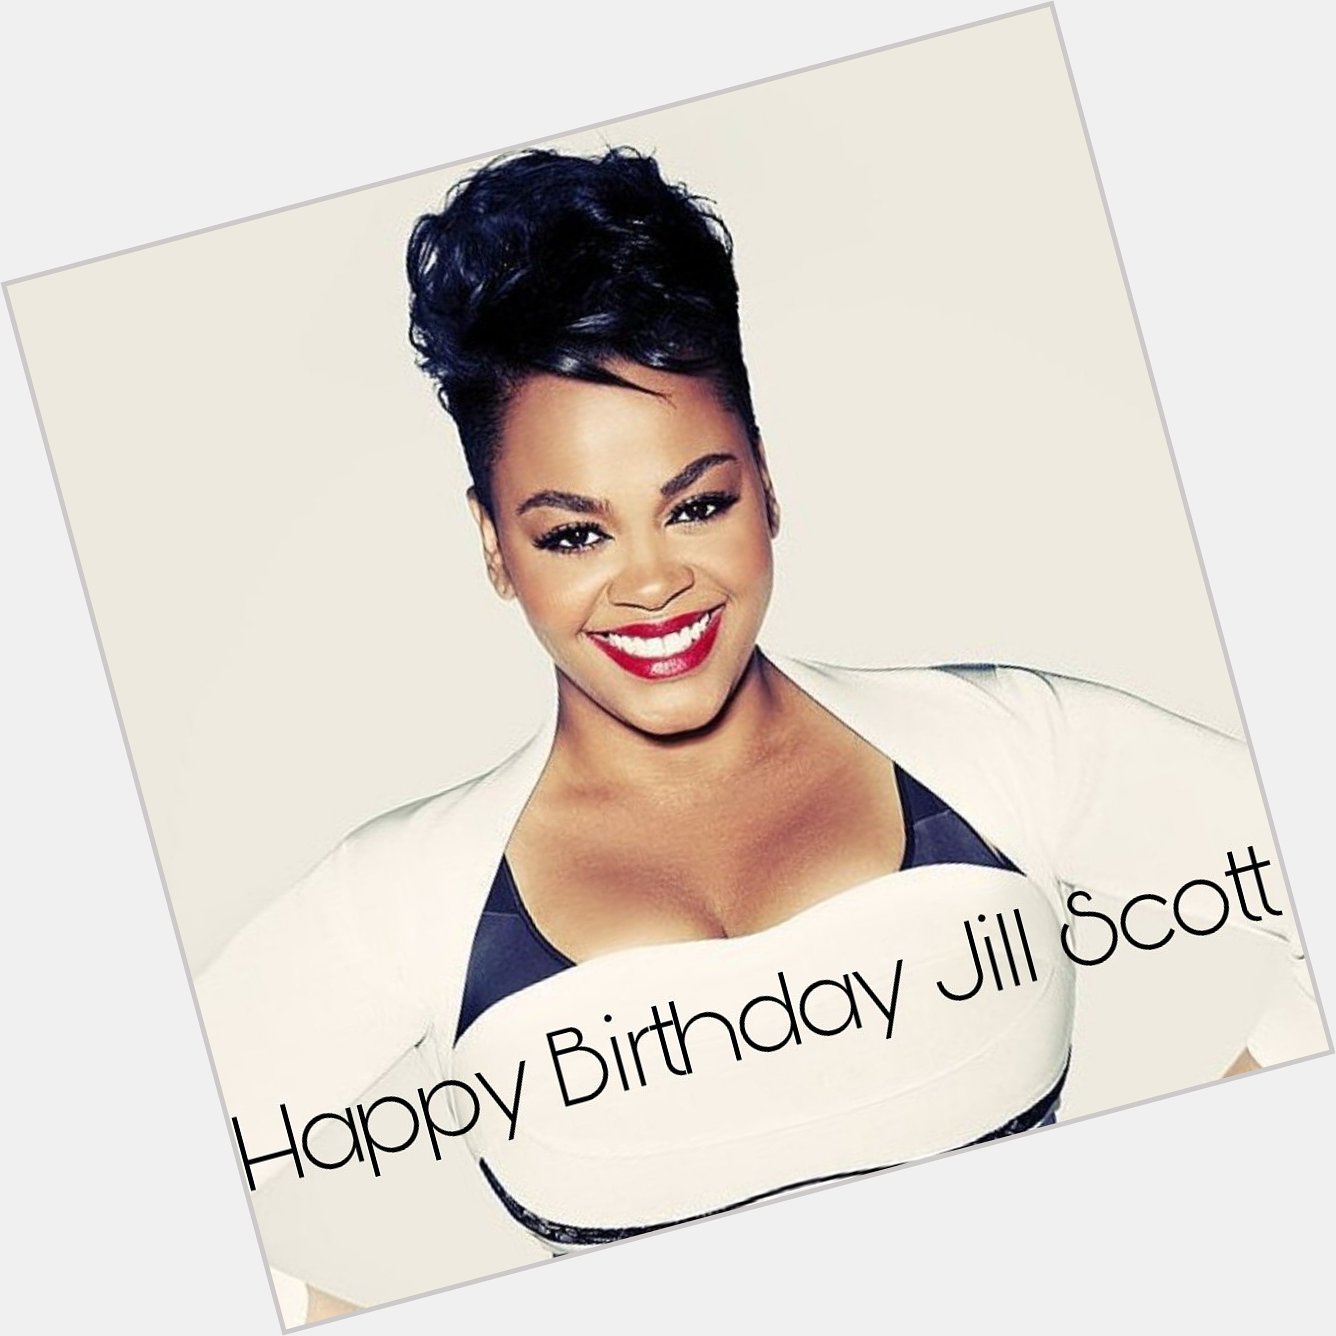 Happy Birthday Jill Scott.  